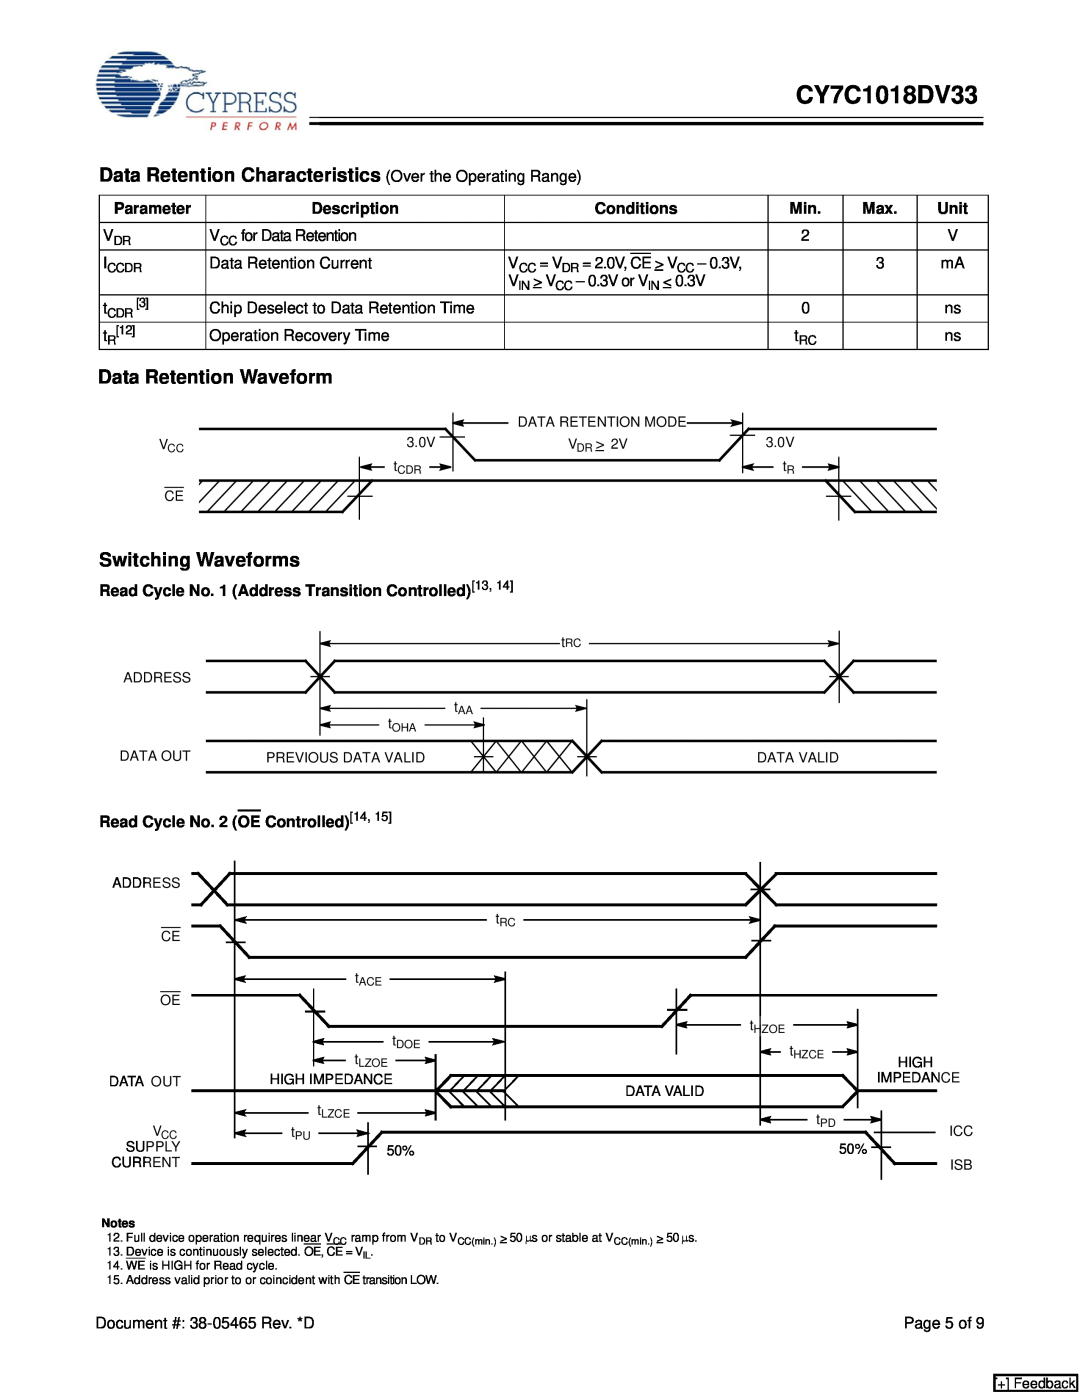 Cypress CY7C1018DV33 Data Retention Characteristics Over the Operating Range, Data Retention Waveform, Switching Waveforms 